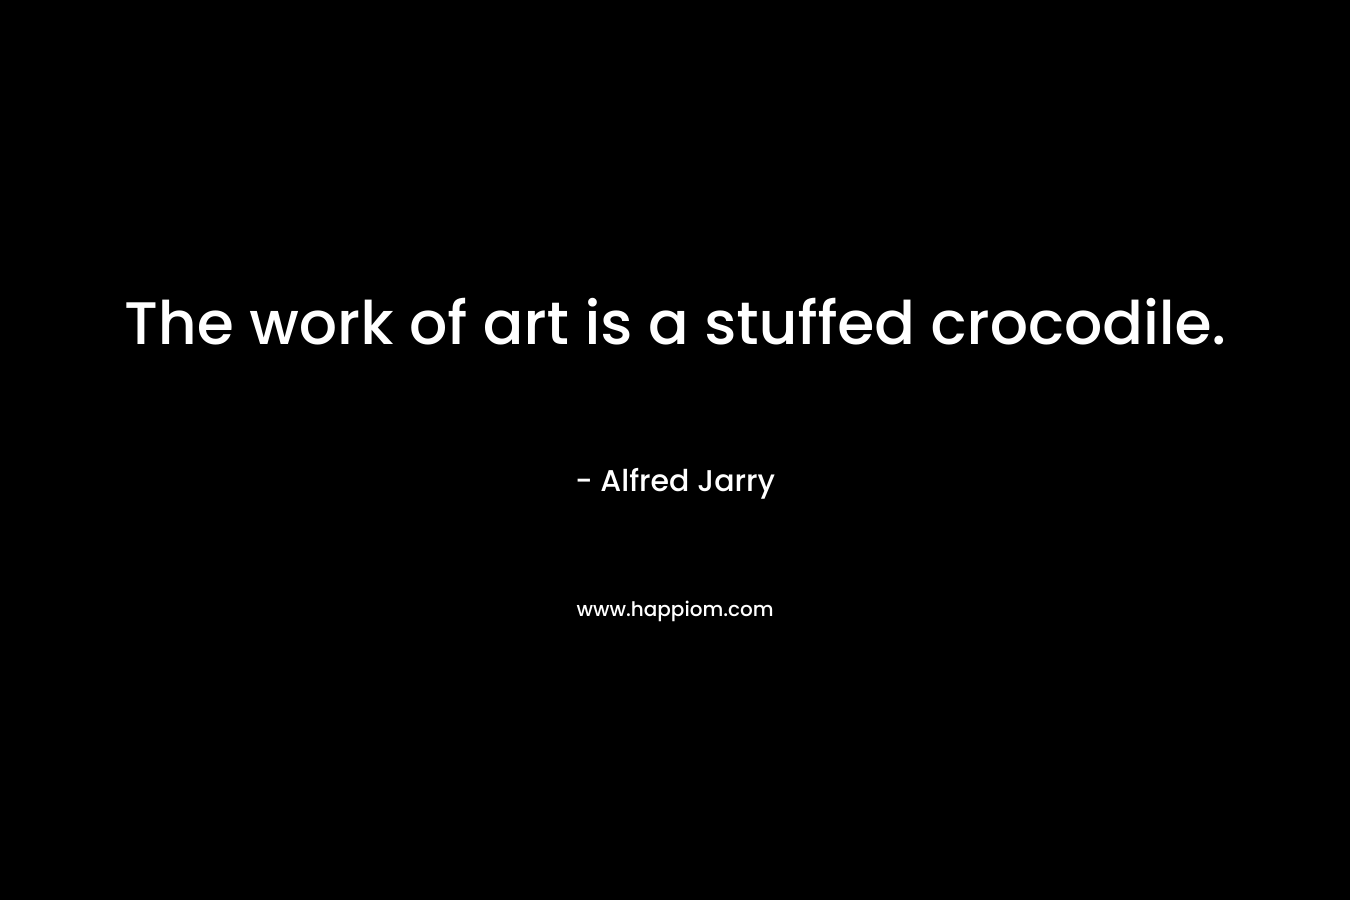 The work of art is a stuffed crocodile. – Alfred Jarry